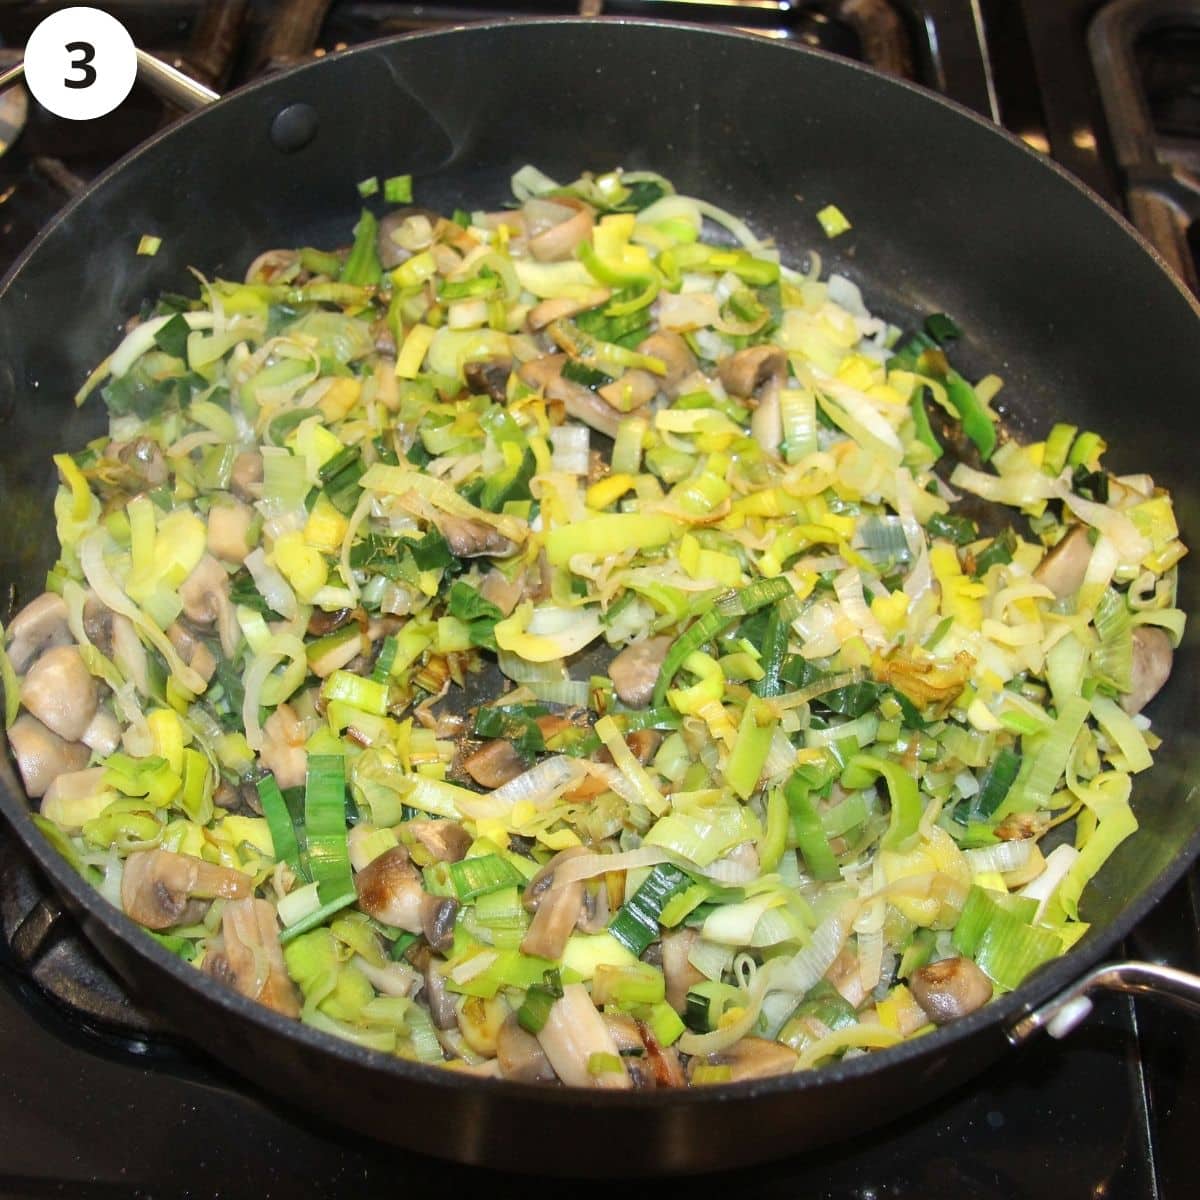 cooking leeks and mushrooms in a pan.